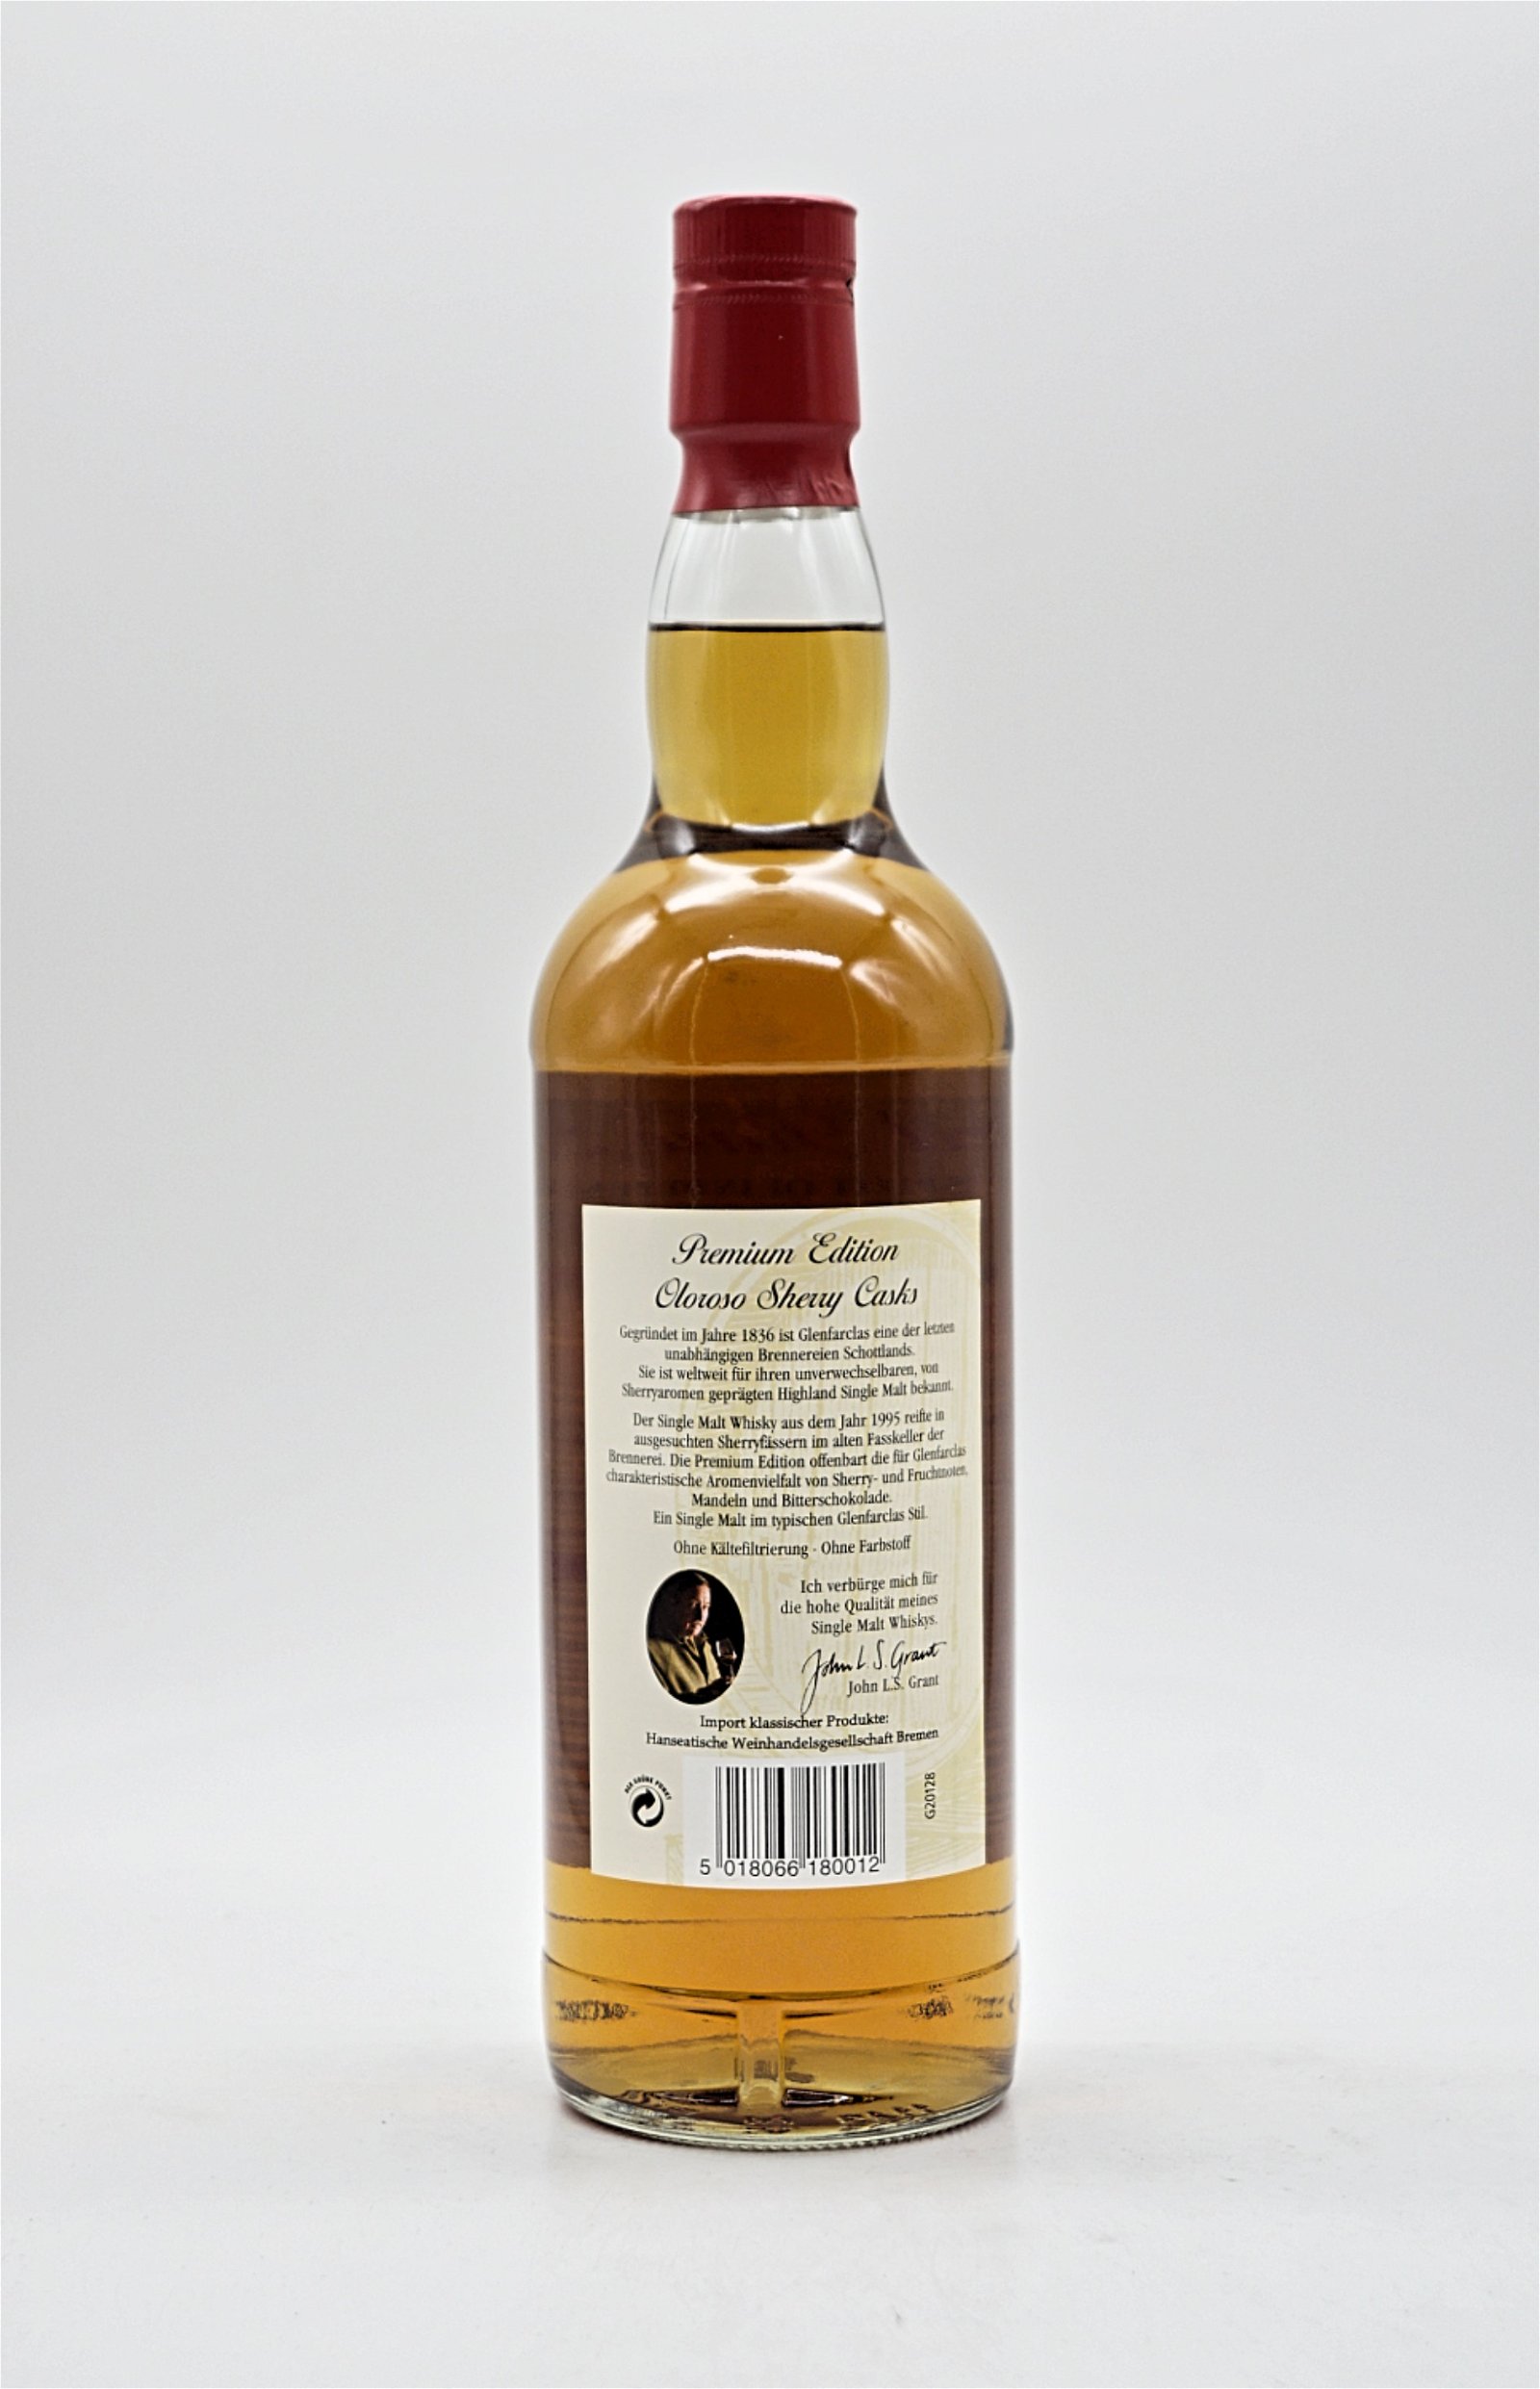 Glenfarclas 1995/2018 Limited Rare Bottling Premium Edition Oloroso Sherry Casks Highland Single Malt Scotch Whisky